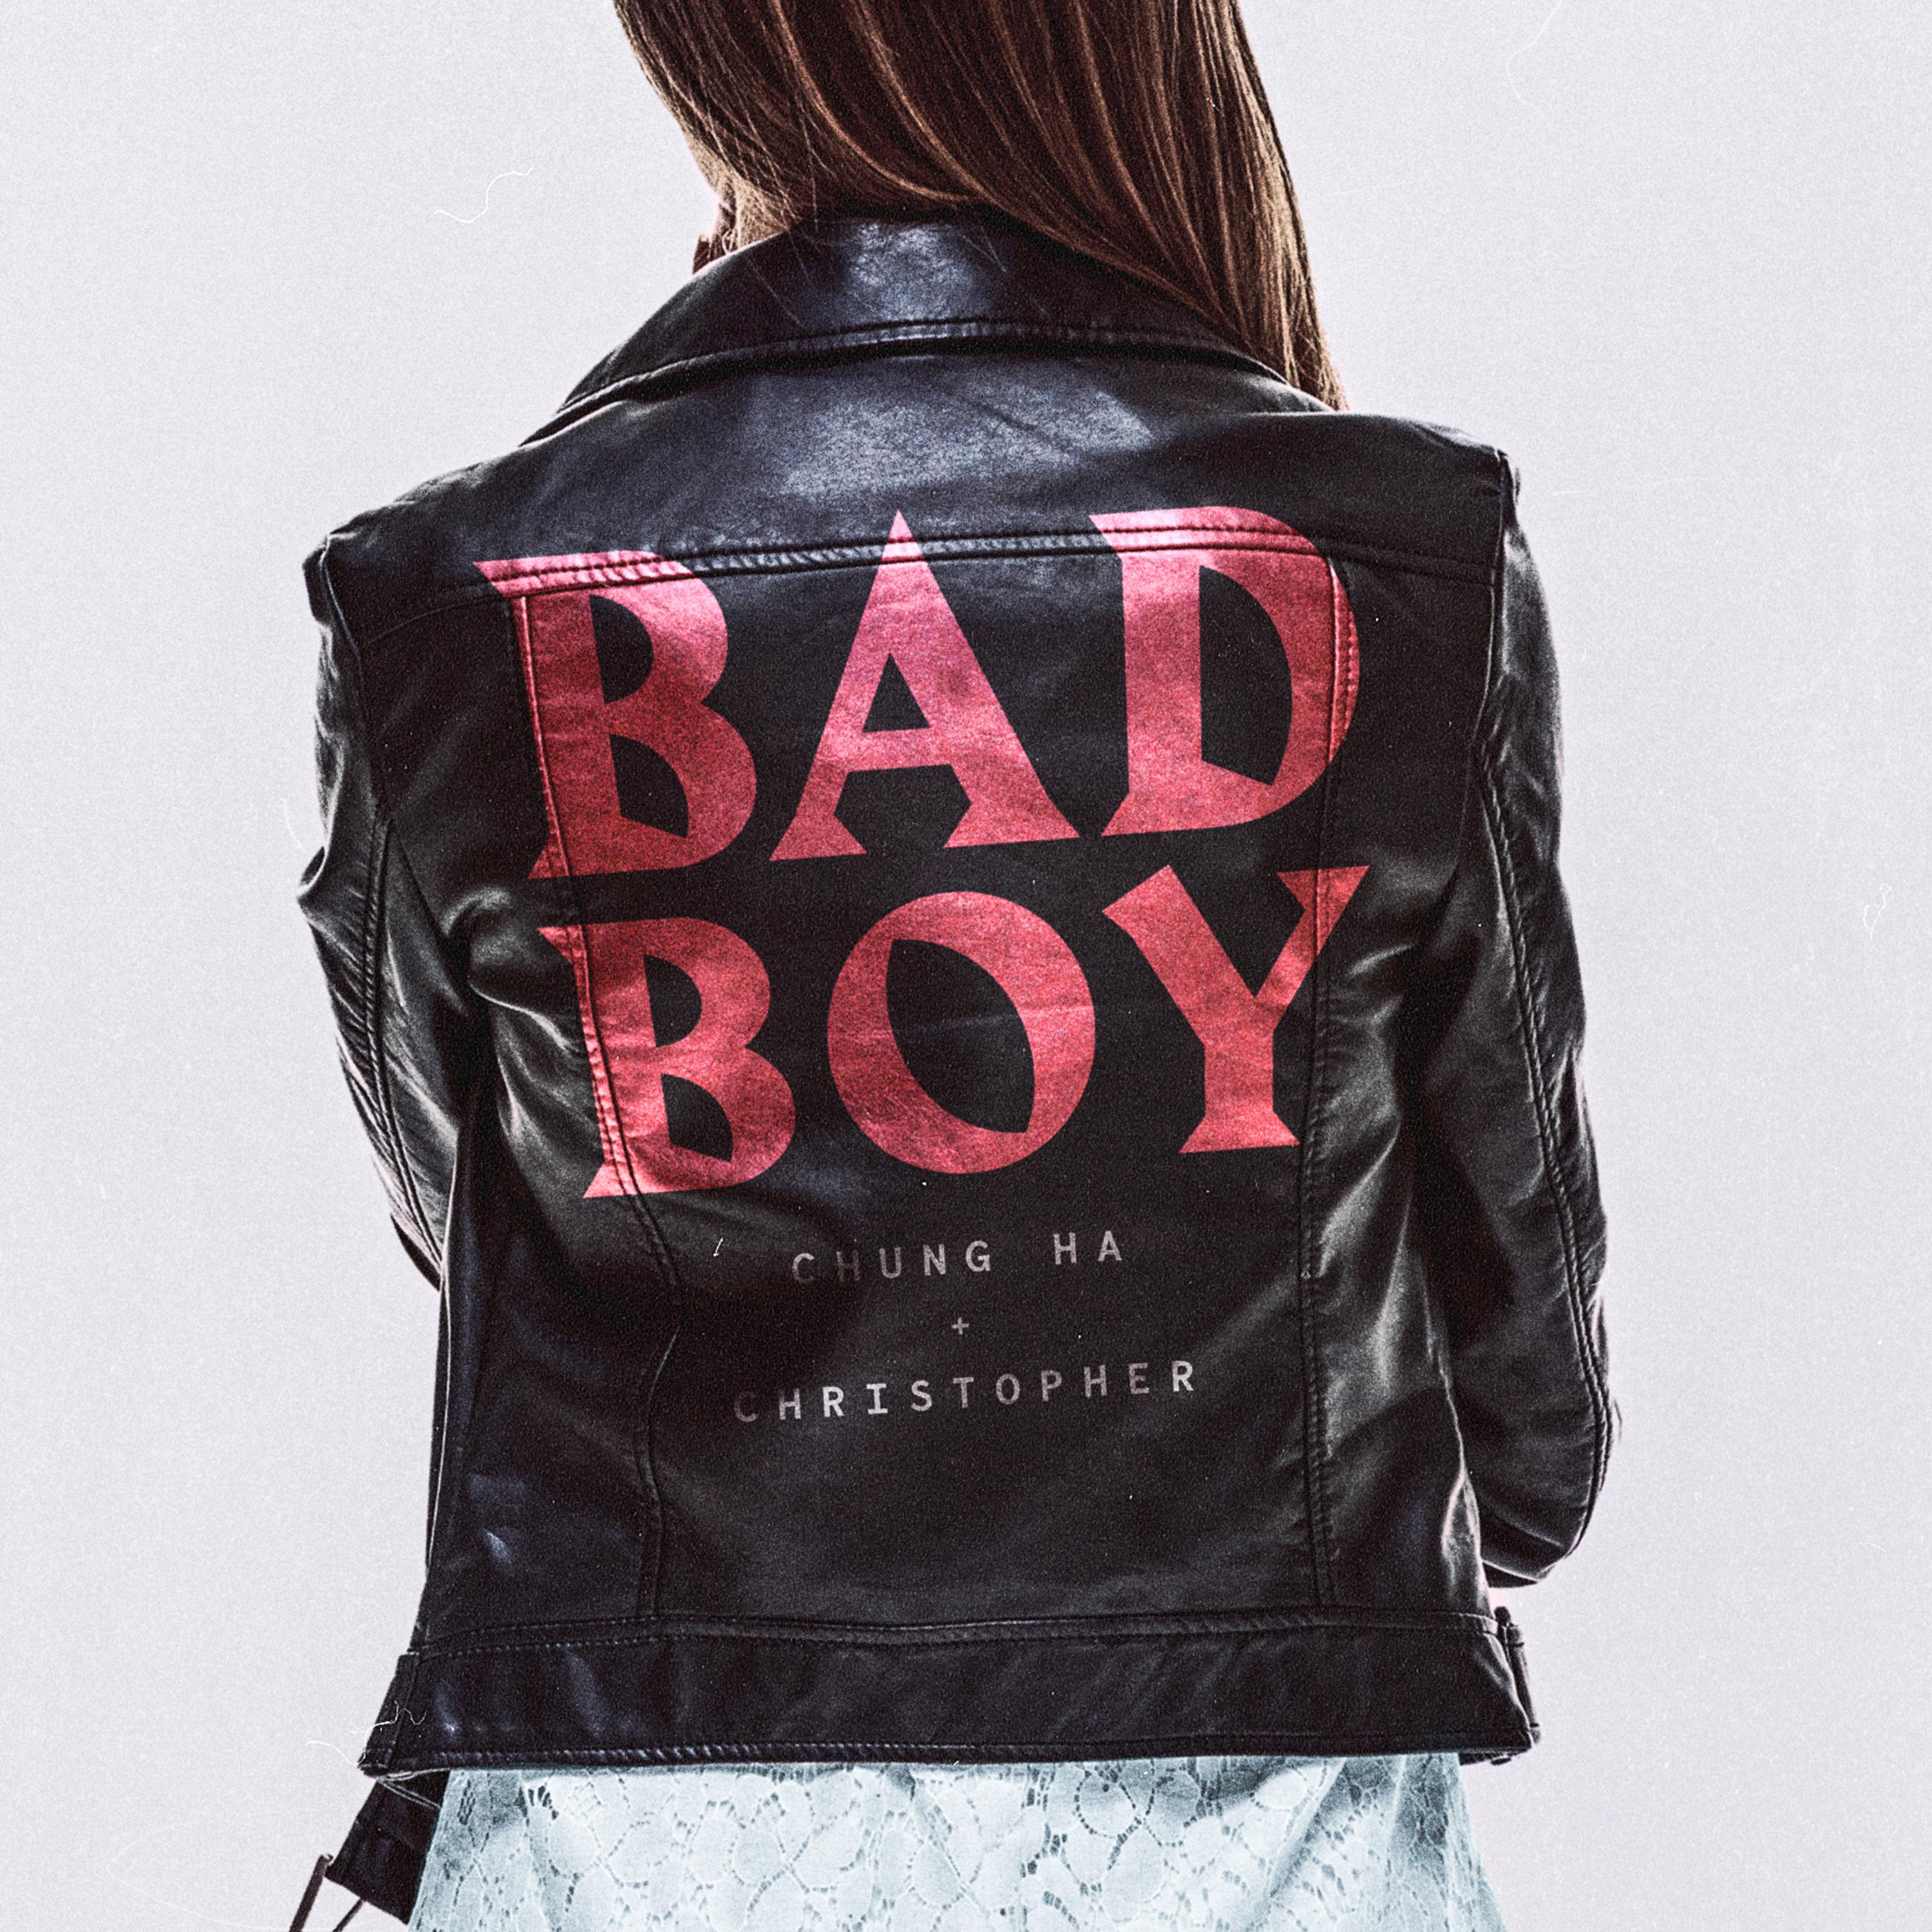 Bad Boy歌词 歌手金请夏 / Christopher-专辑Bad Boy-单曲《Bad Boy》LRC歌词下载